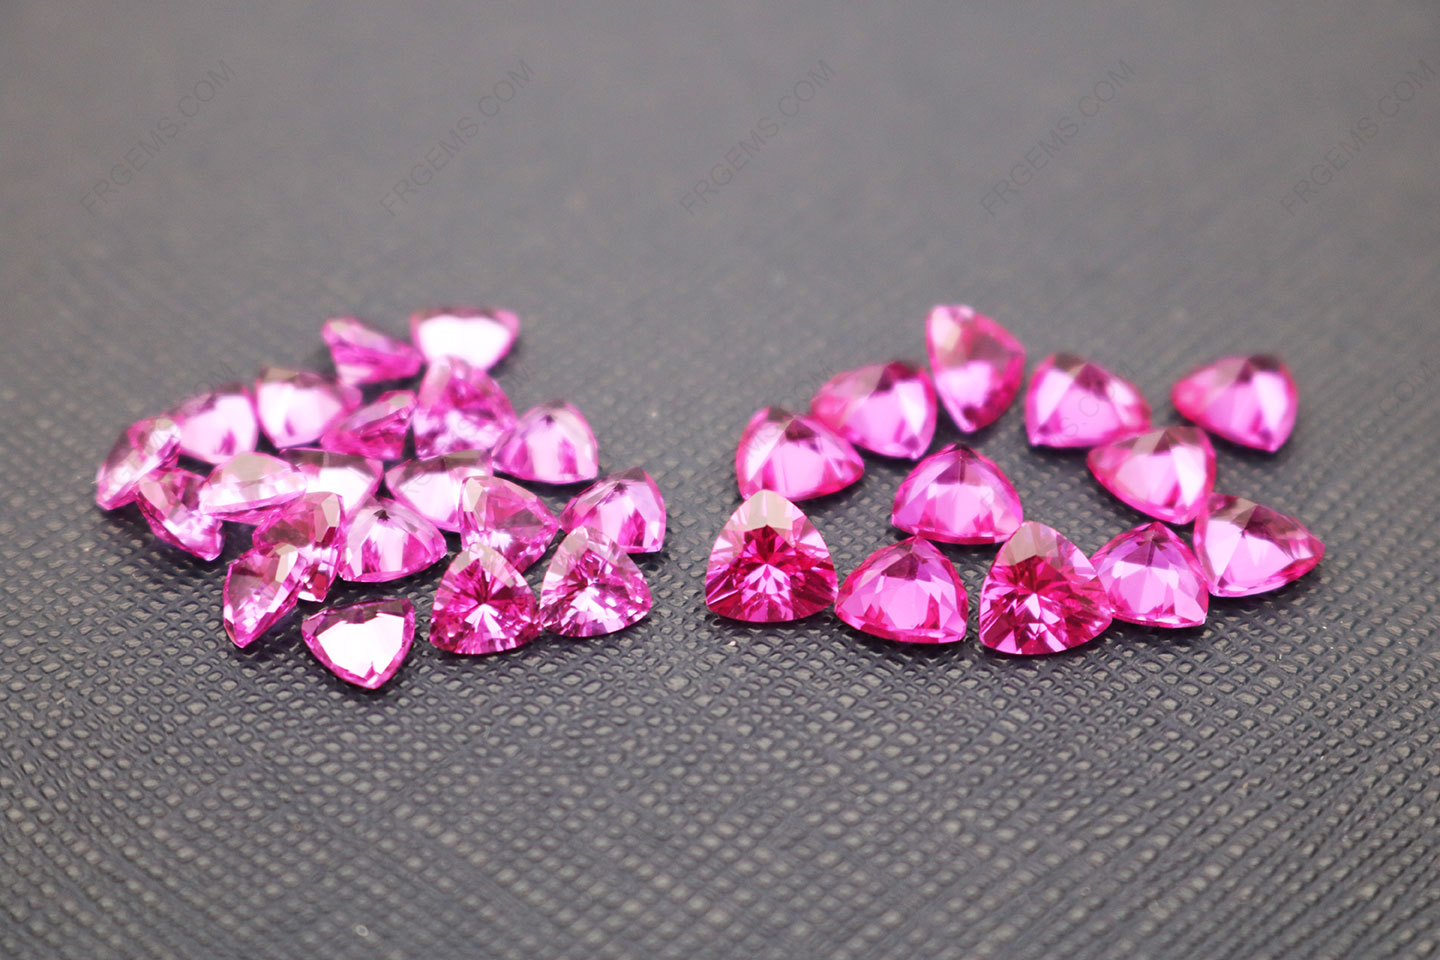 Loose Synthetic Corundum Rose Pink Sapphire #3 Trillion Shape Faceted Cut gemstones